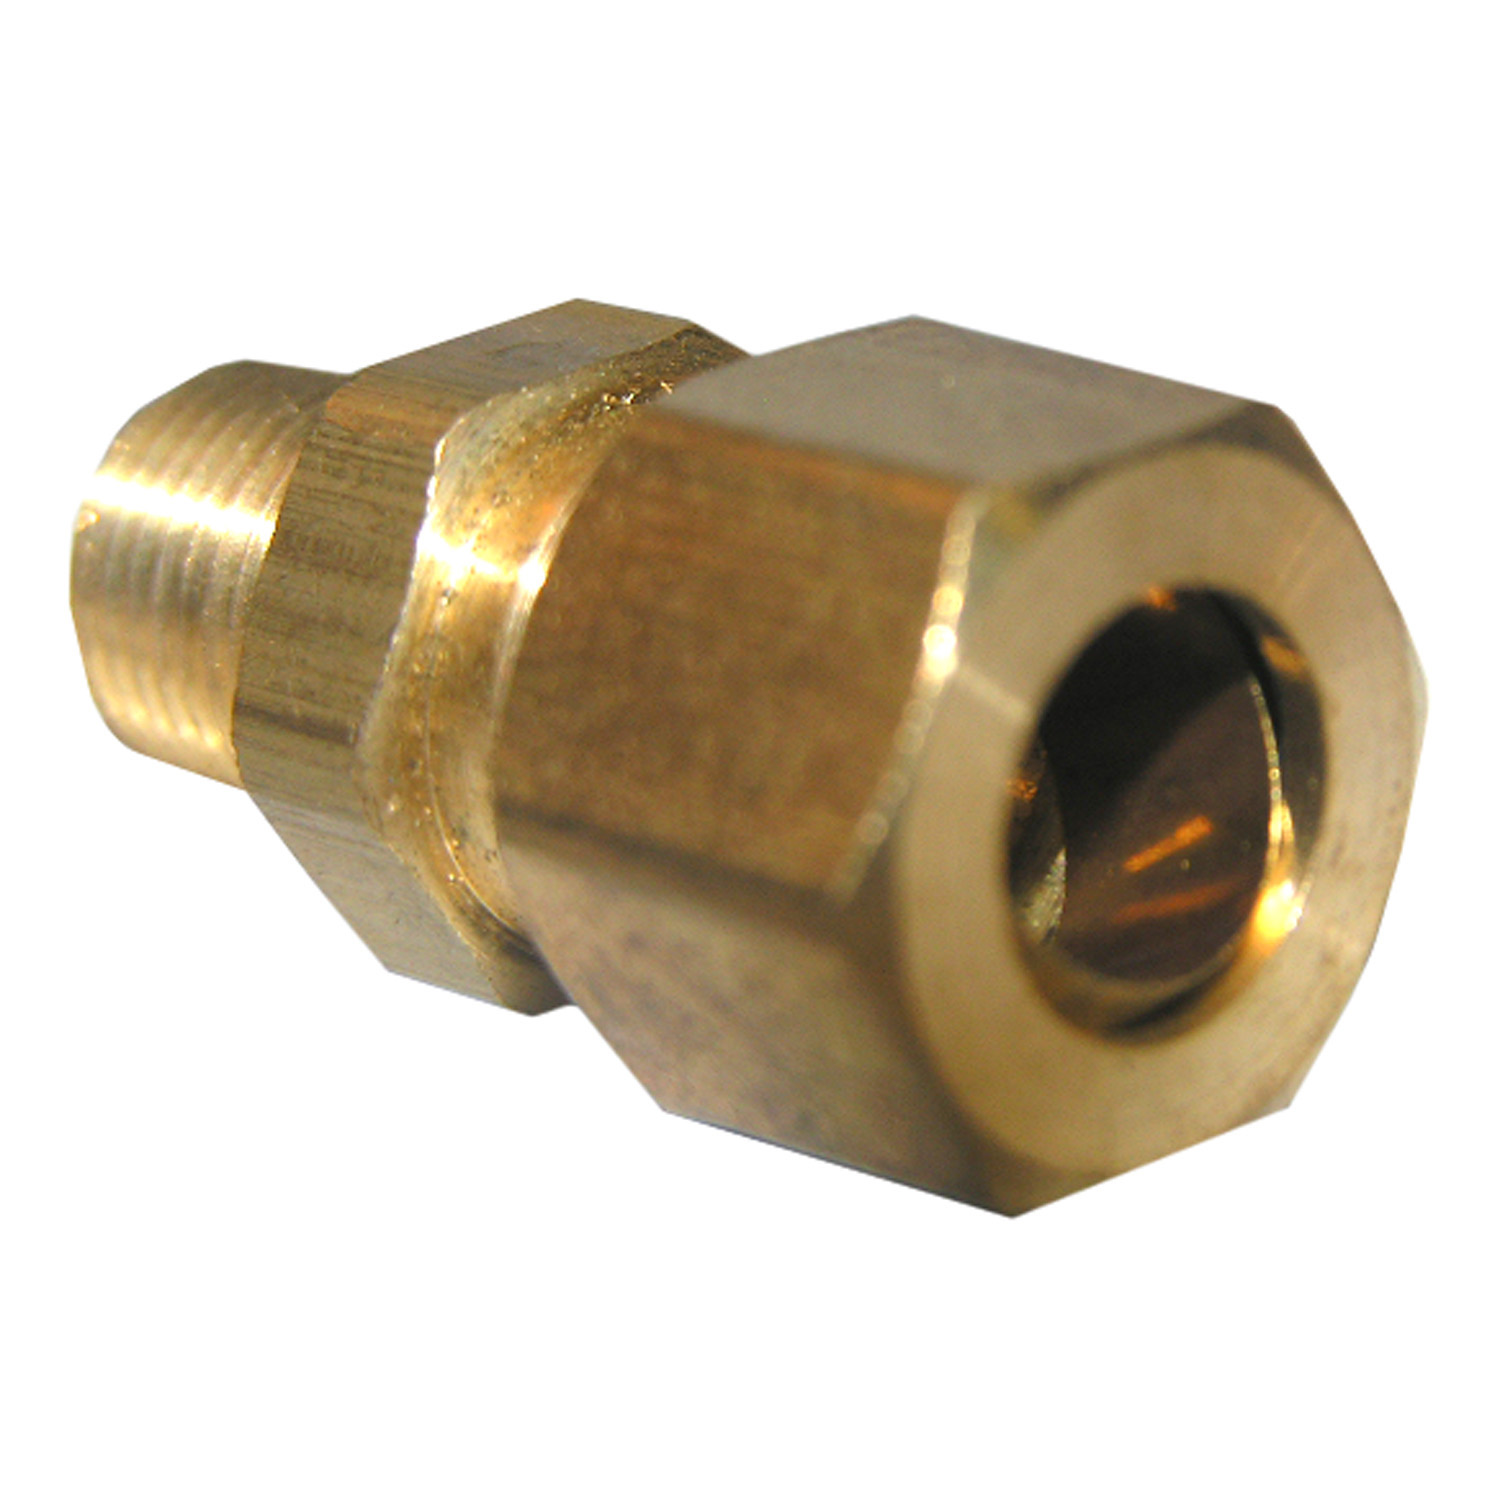 17-6831 Pipe Adapter, 3/8 x 1/8 in, Compression x MPT, Brass, 150 psi Pressure